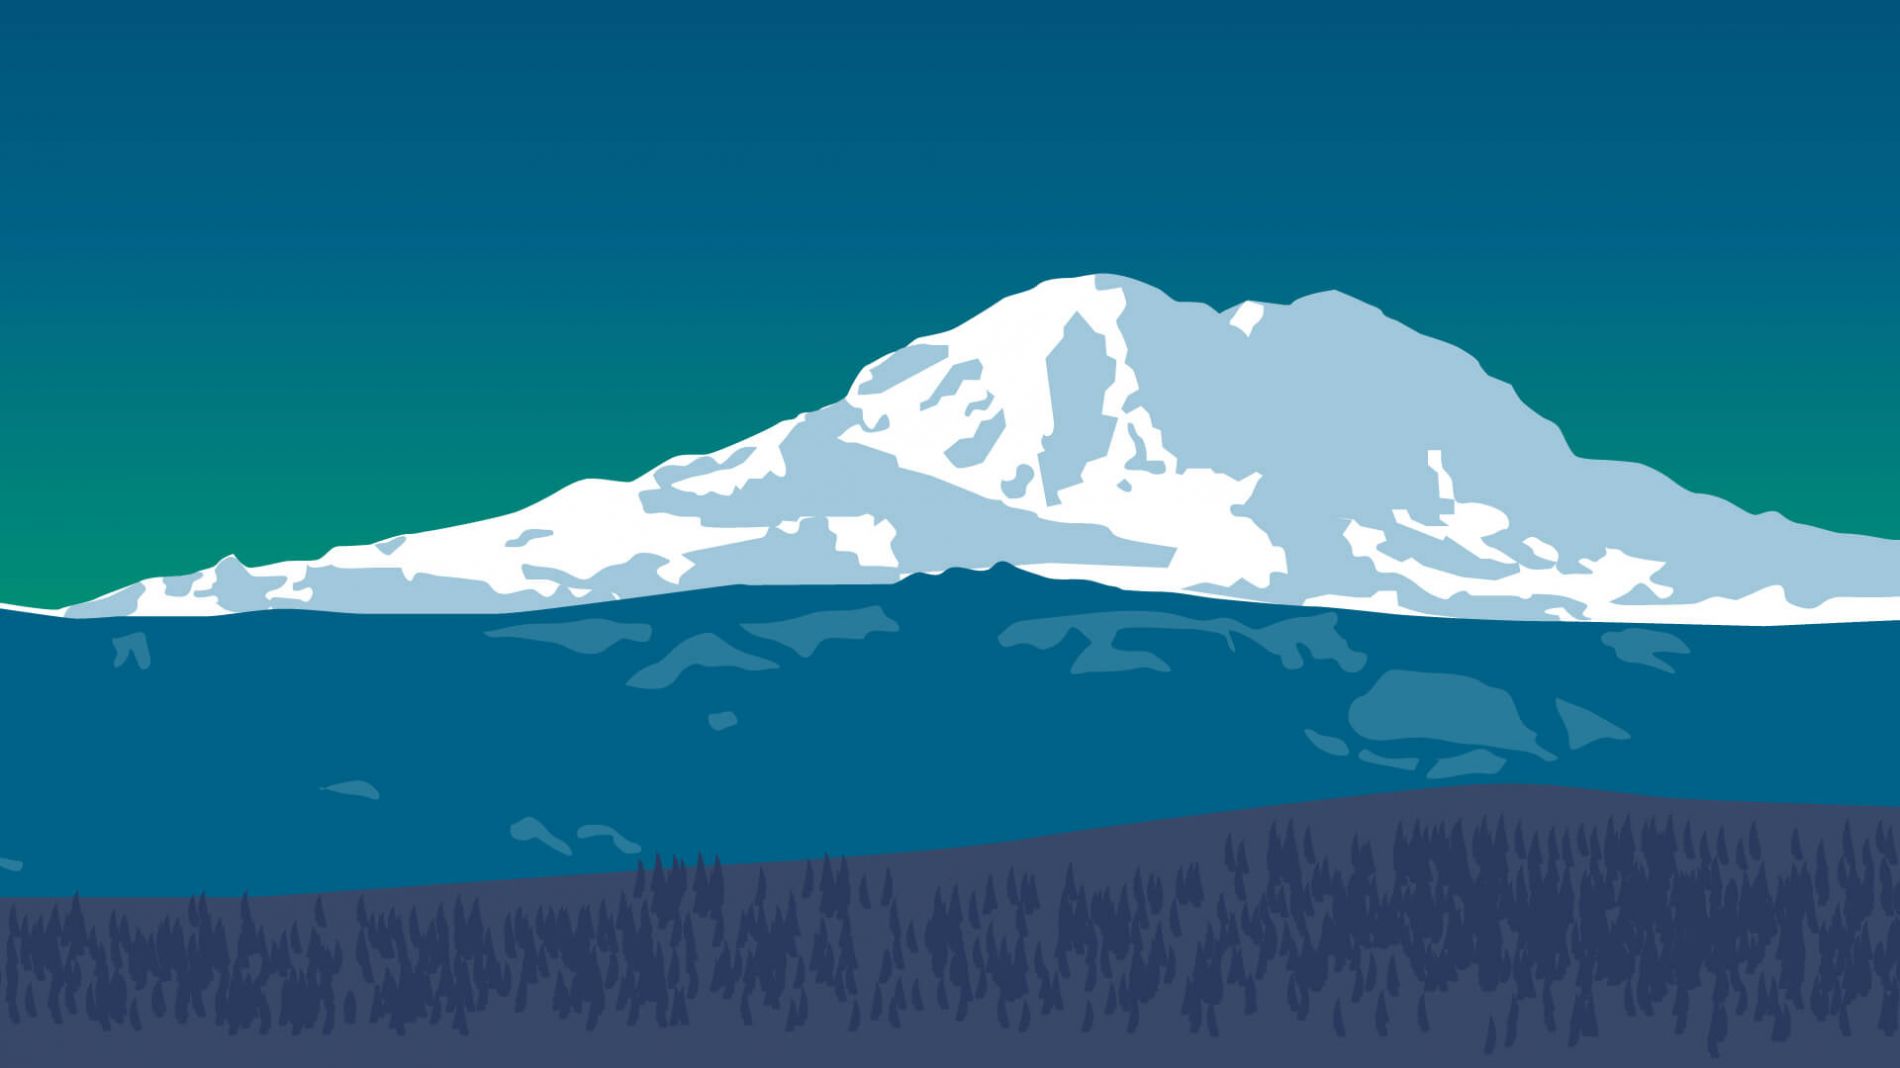 Mount Rainier background image.